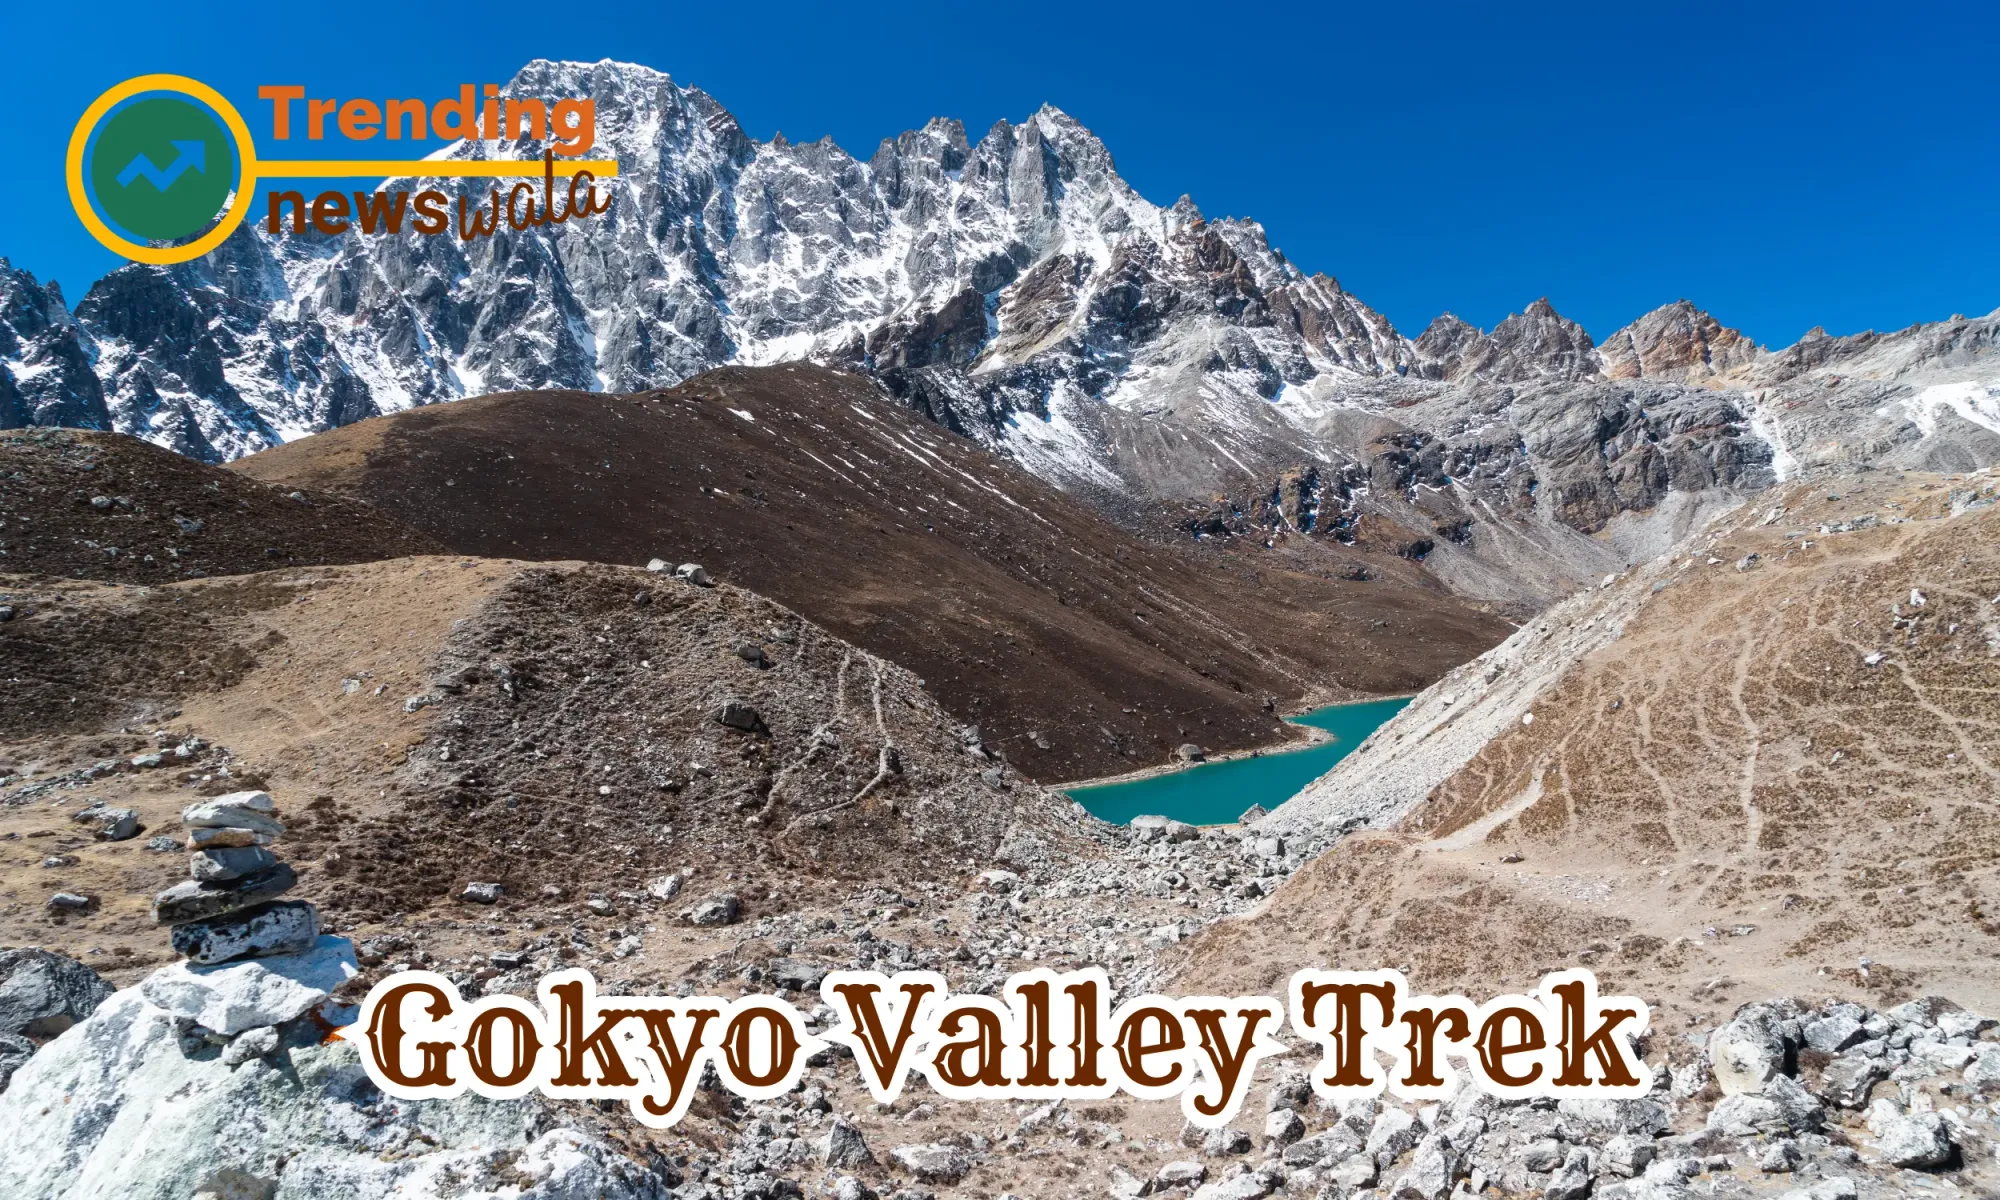 The Gokyo Valley Trek is a captivating trekking adventure in the Everest region of Nepal